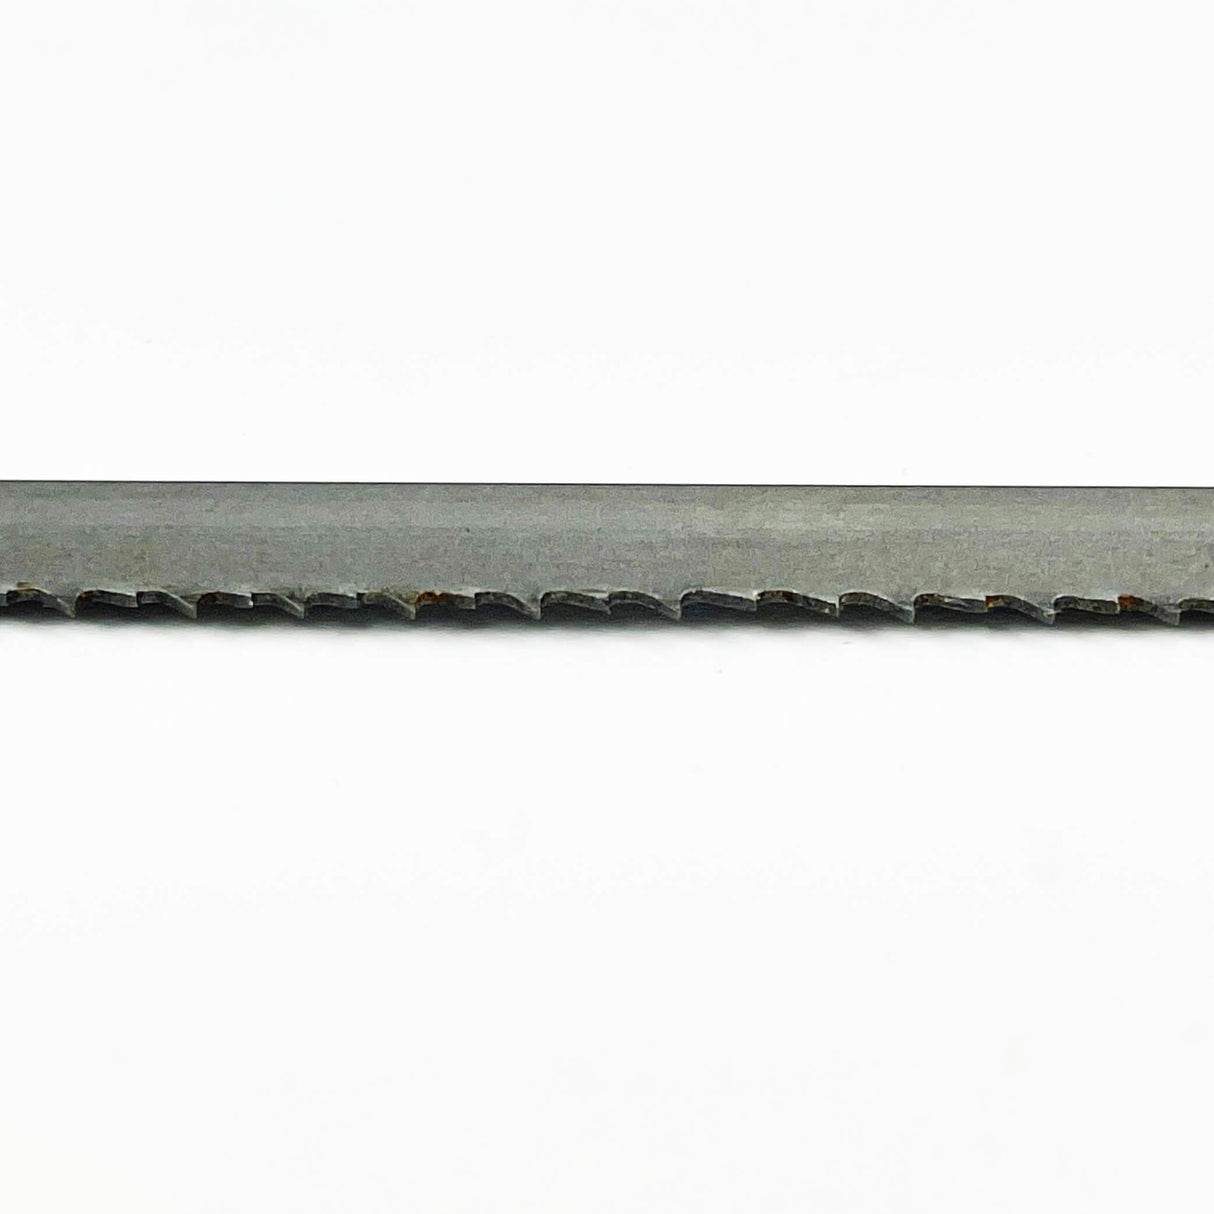 1642mm Long x 13mm Wide COBALT M42 Bi-Metal Band Saw - Pack of 2 Blades